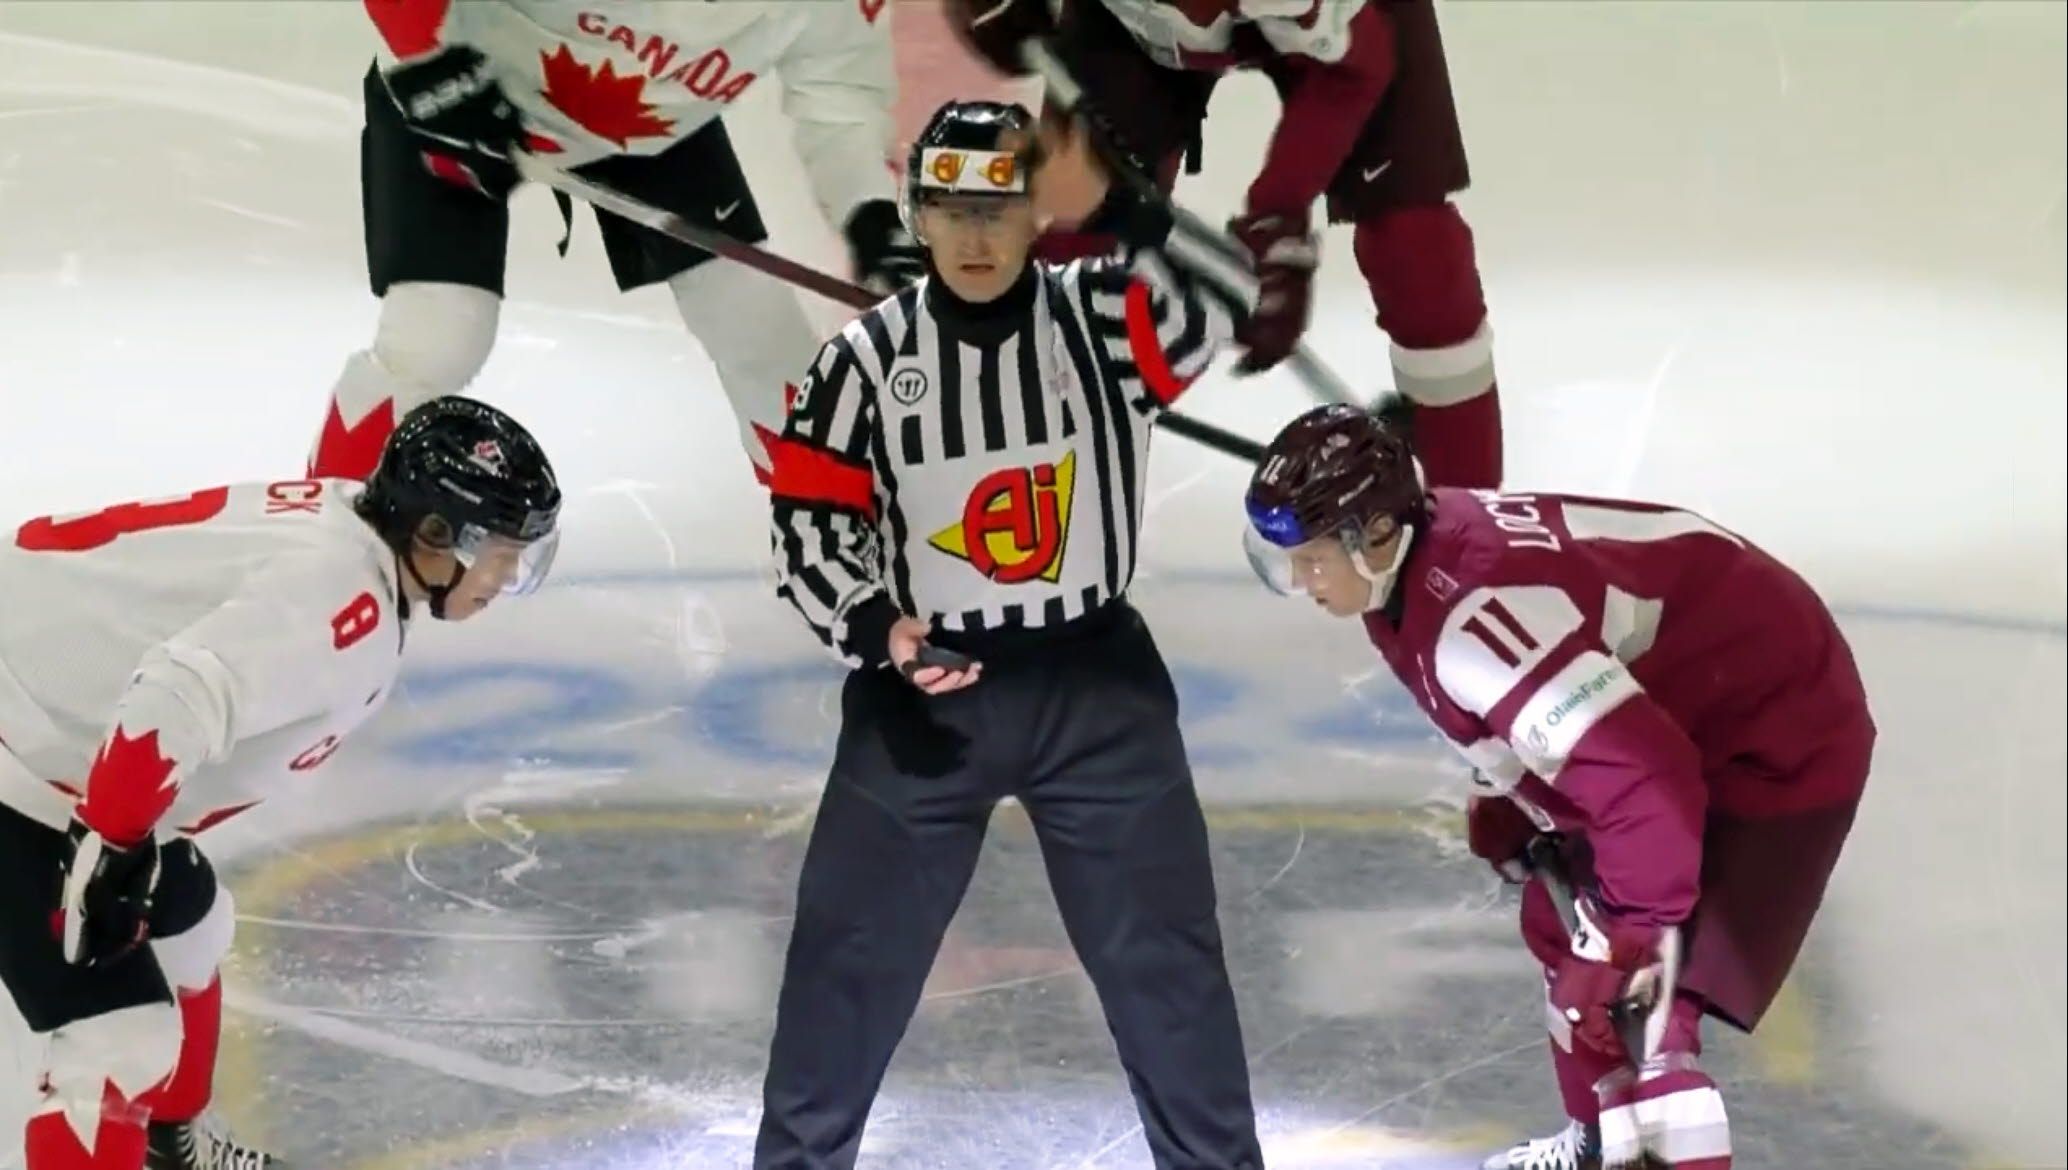 Referee in ice hockey using eye tracking